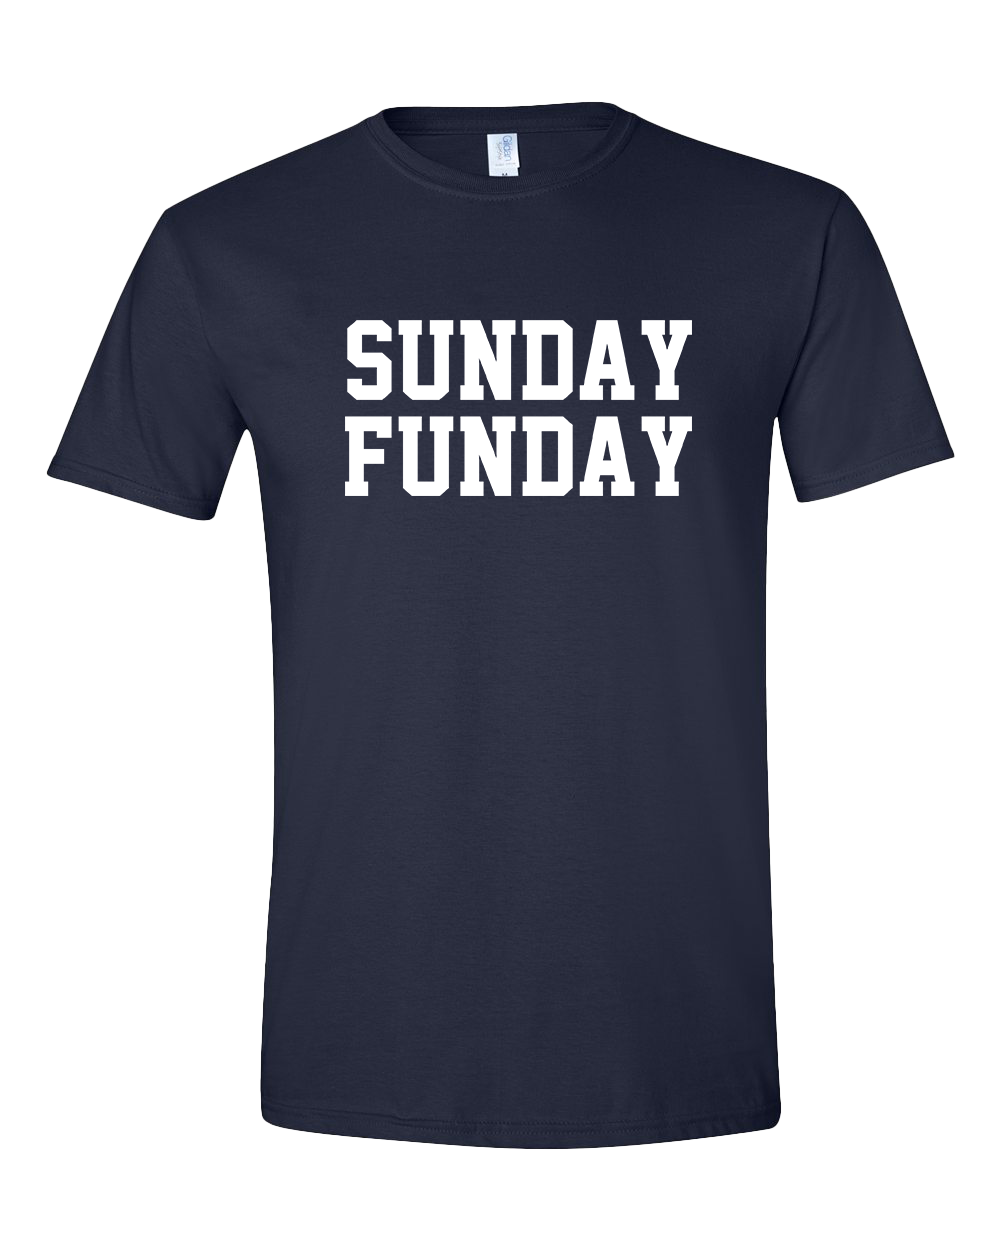 Sunday Funday tshirt - Navy